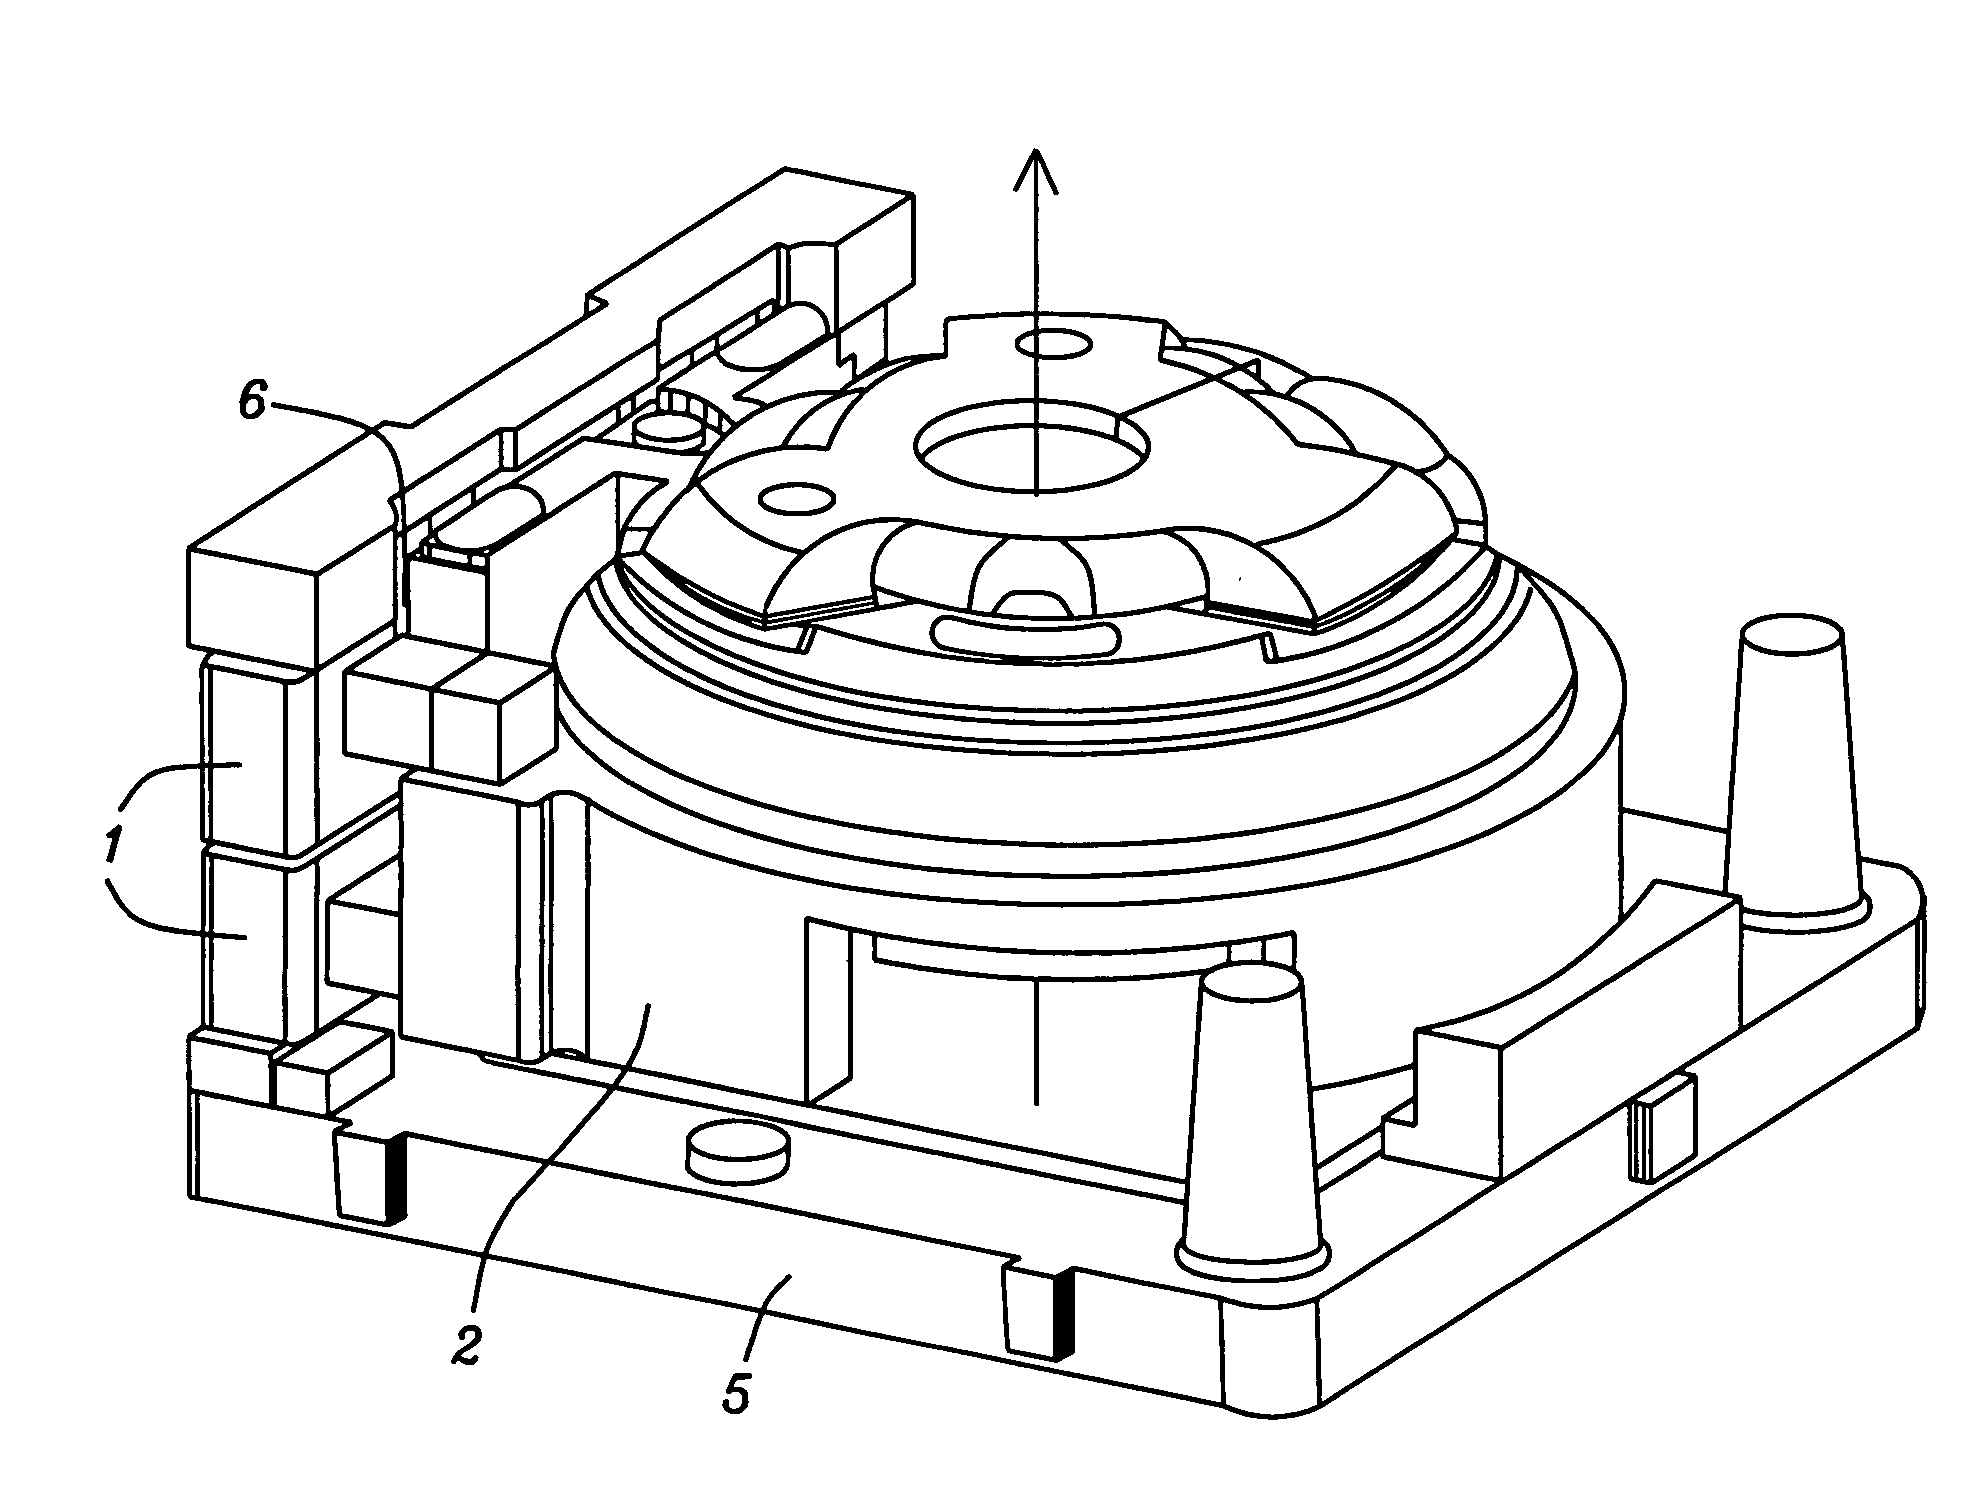 Twin-actuator configuration for a camera module